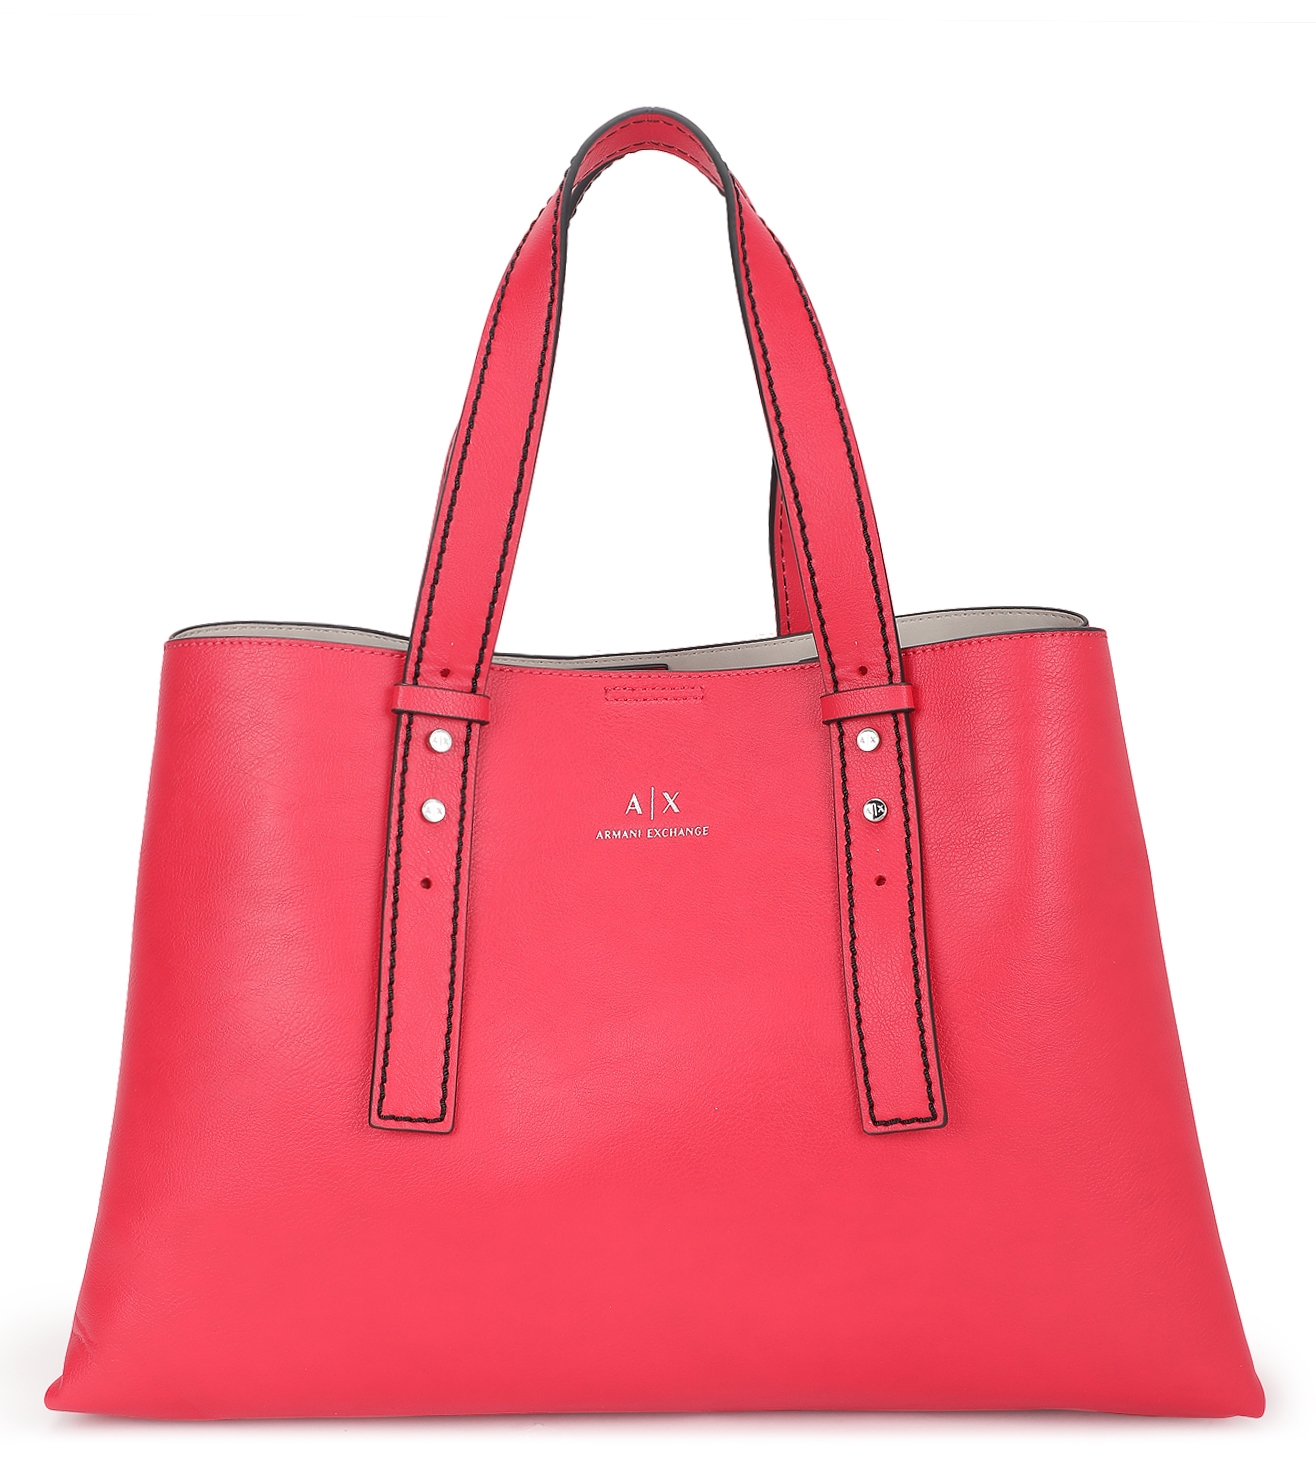 Emporio Armani Bags for Women - Shop on FARFETCH